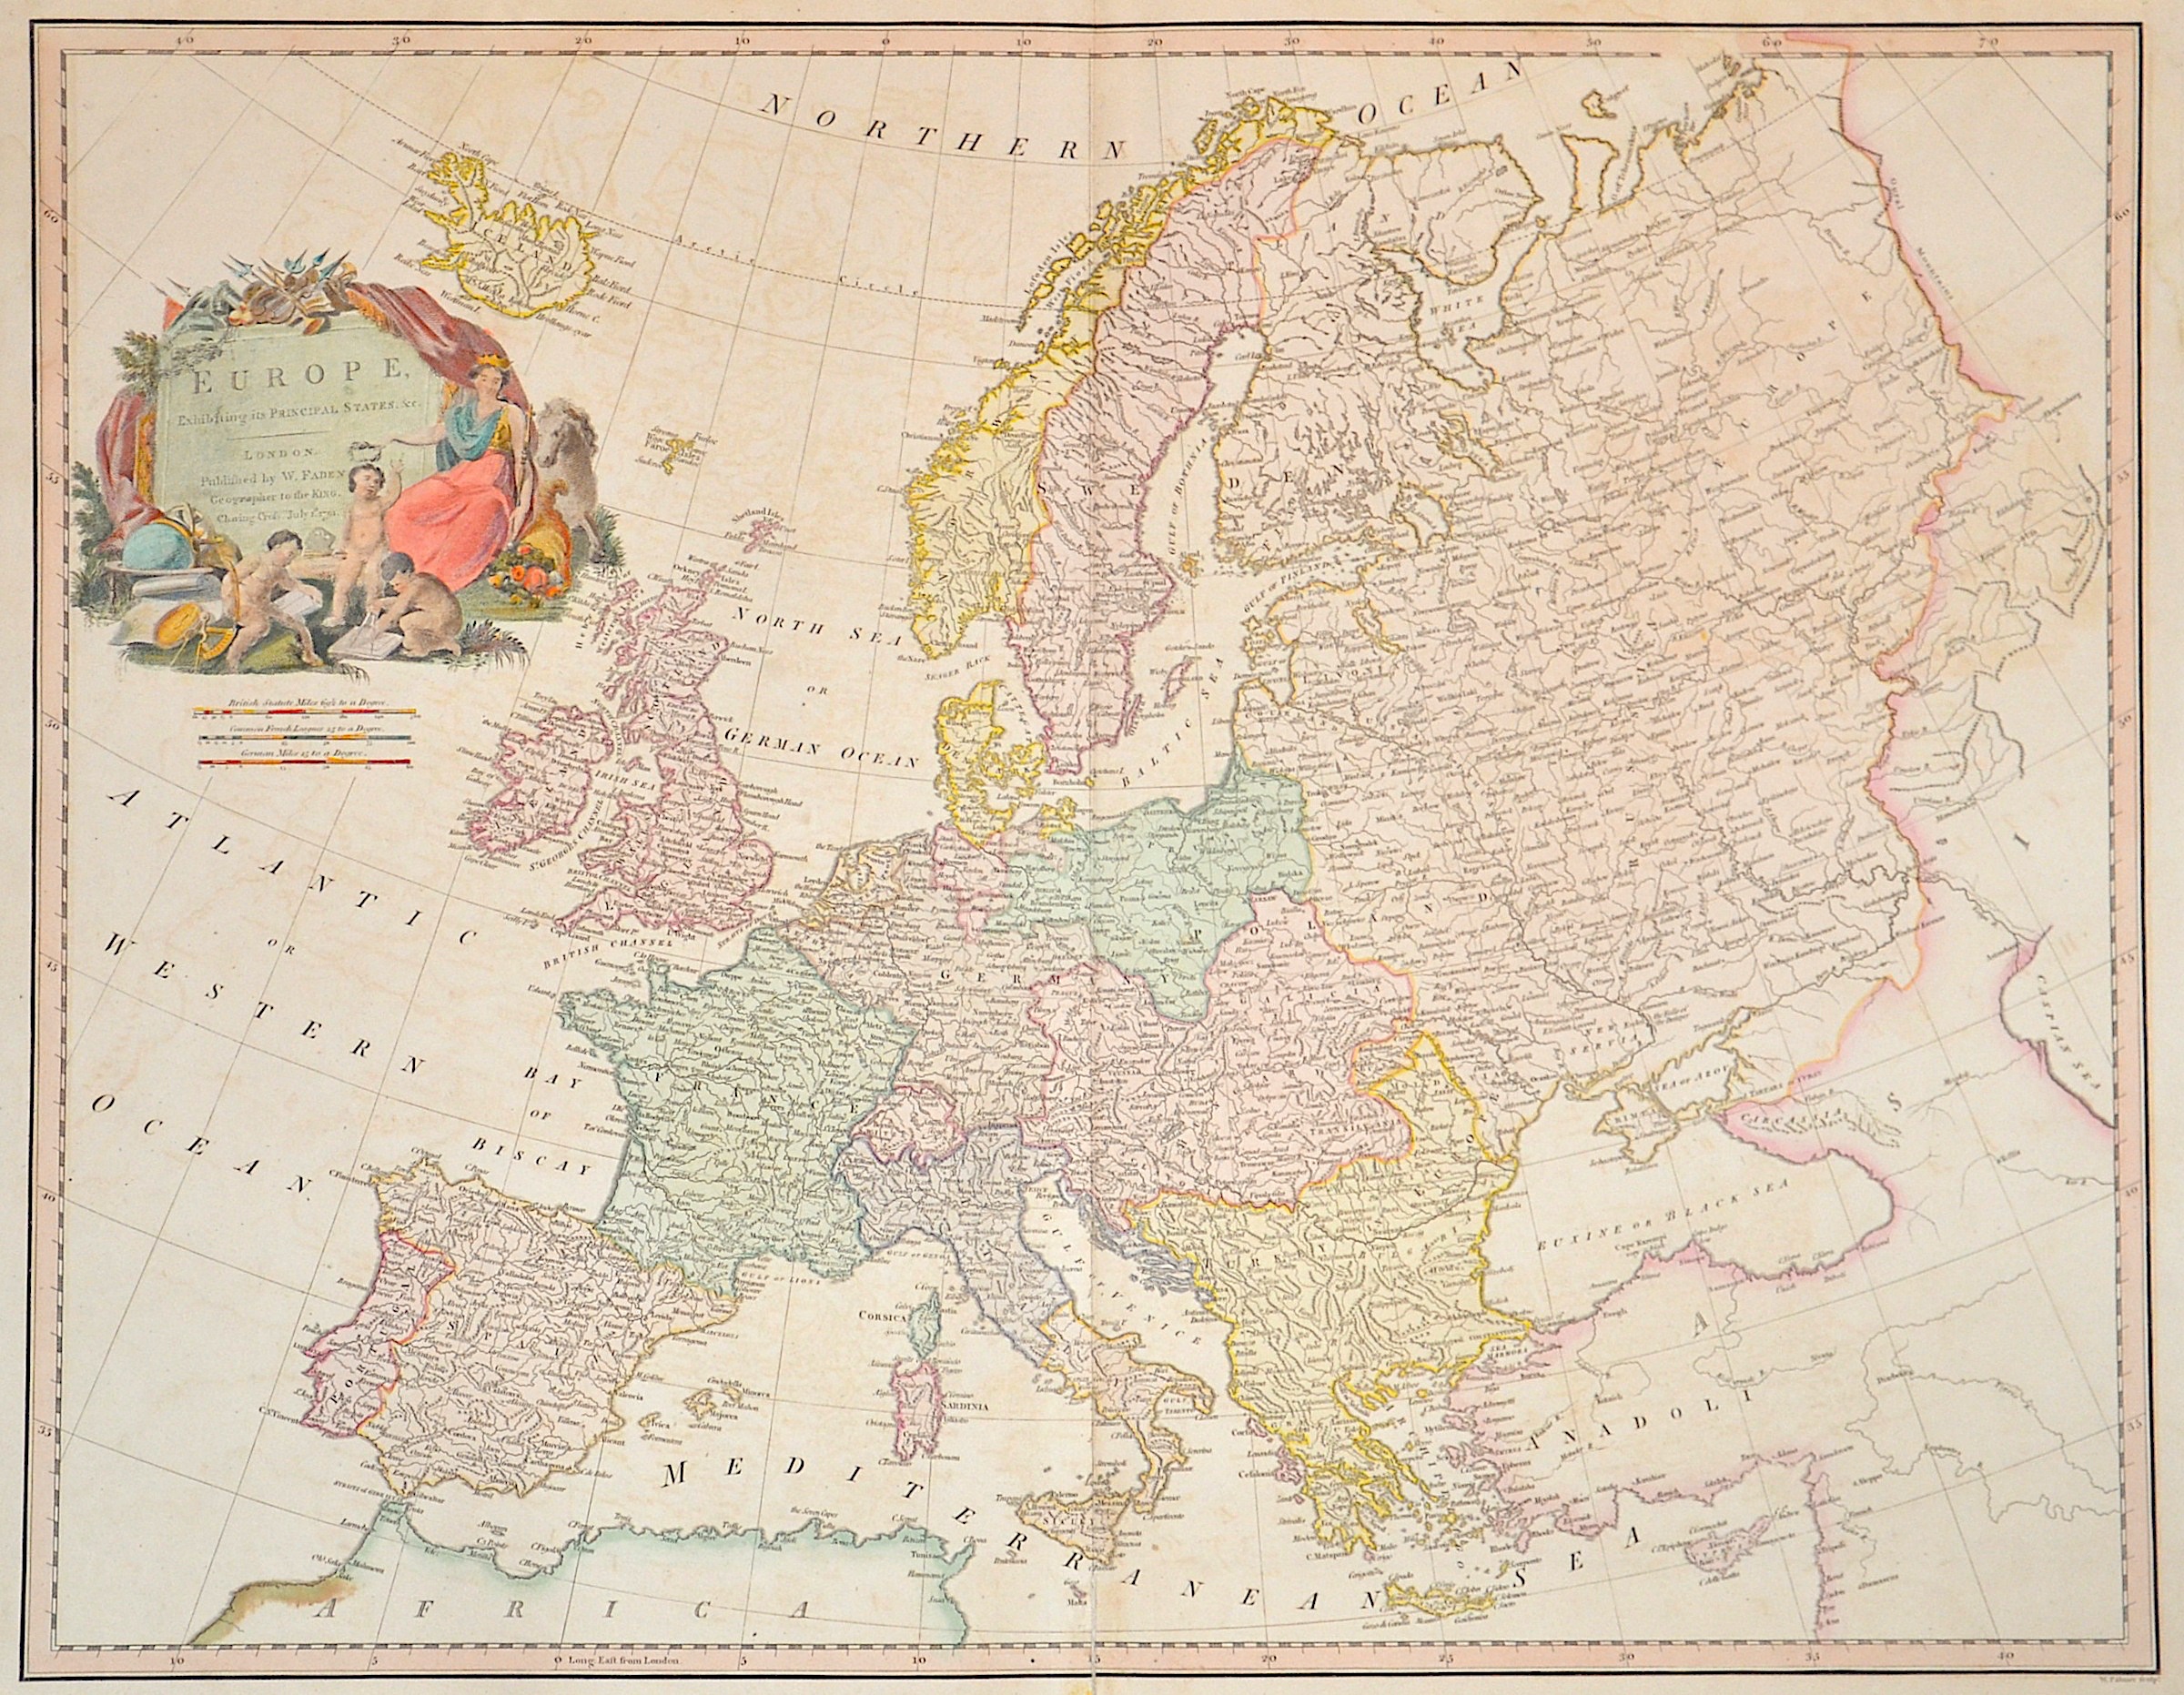 Faden William Europe, Exhibiting its principal states.